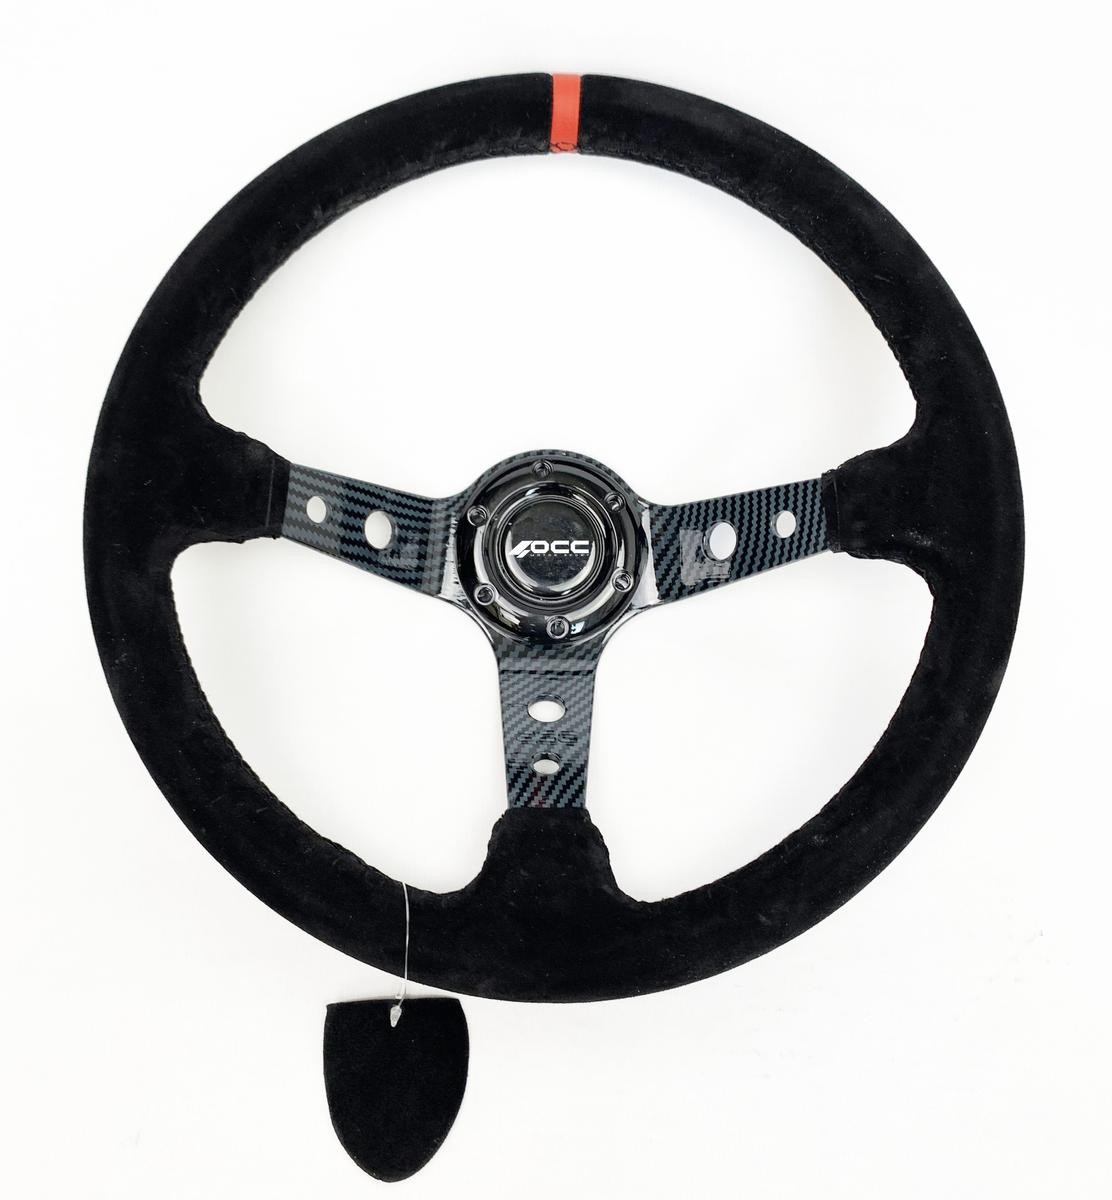 Ford FOCUS Sports steering wheel Occ Motorsport OCCVOL005 cheap